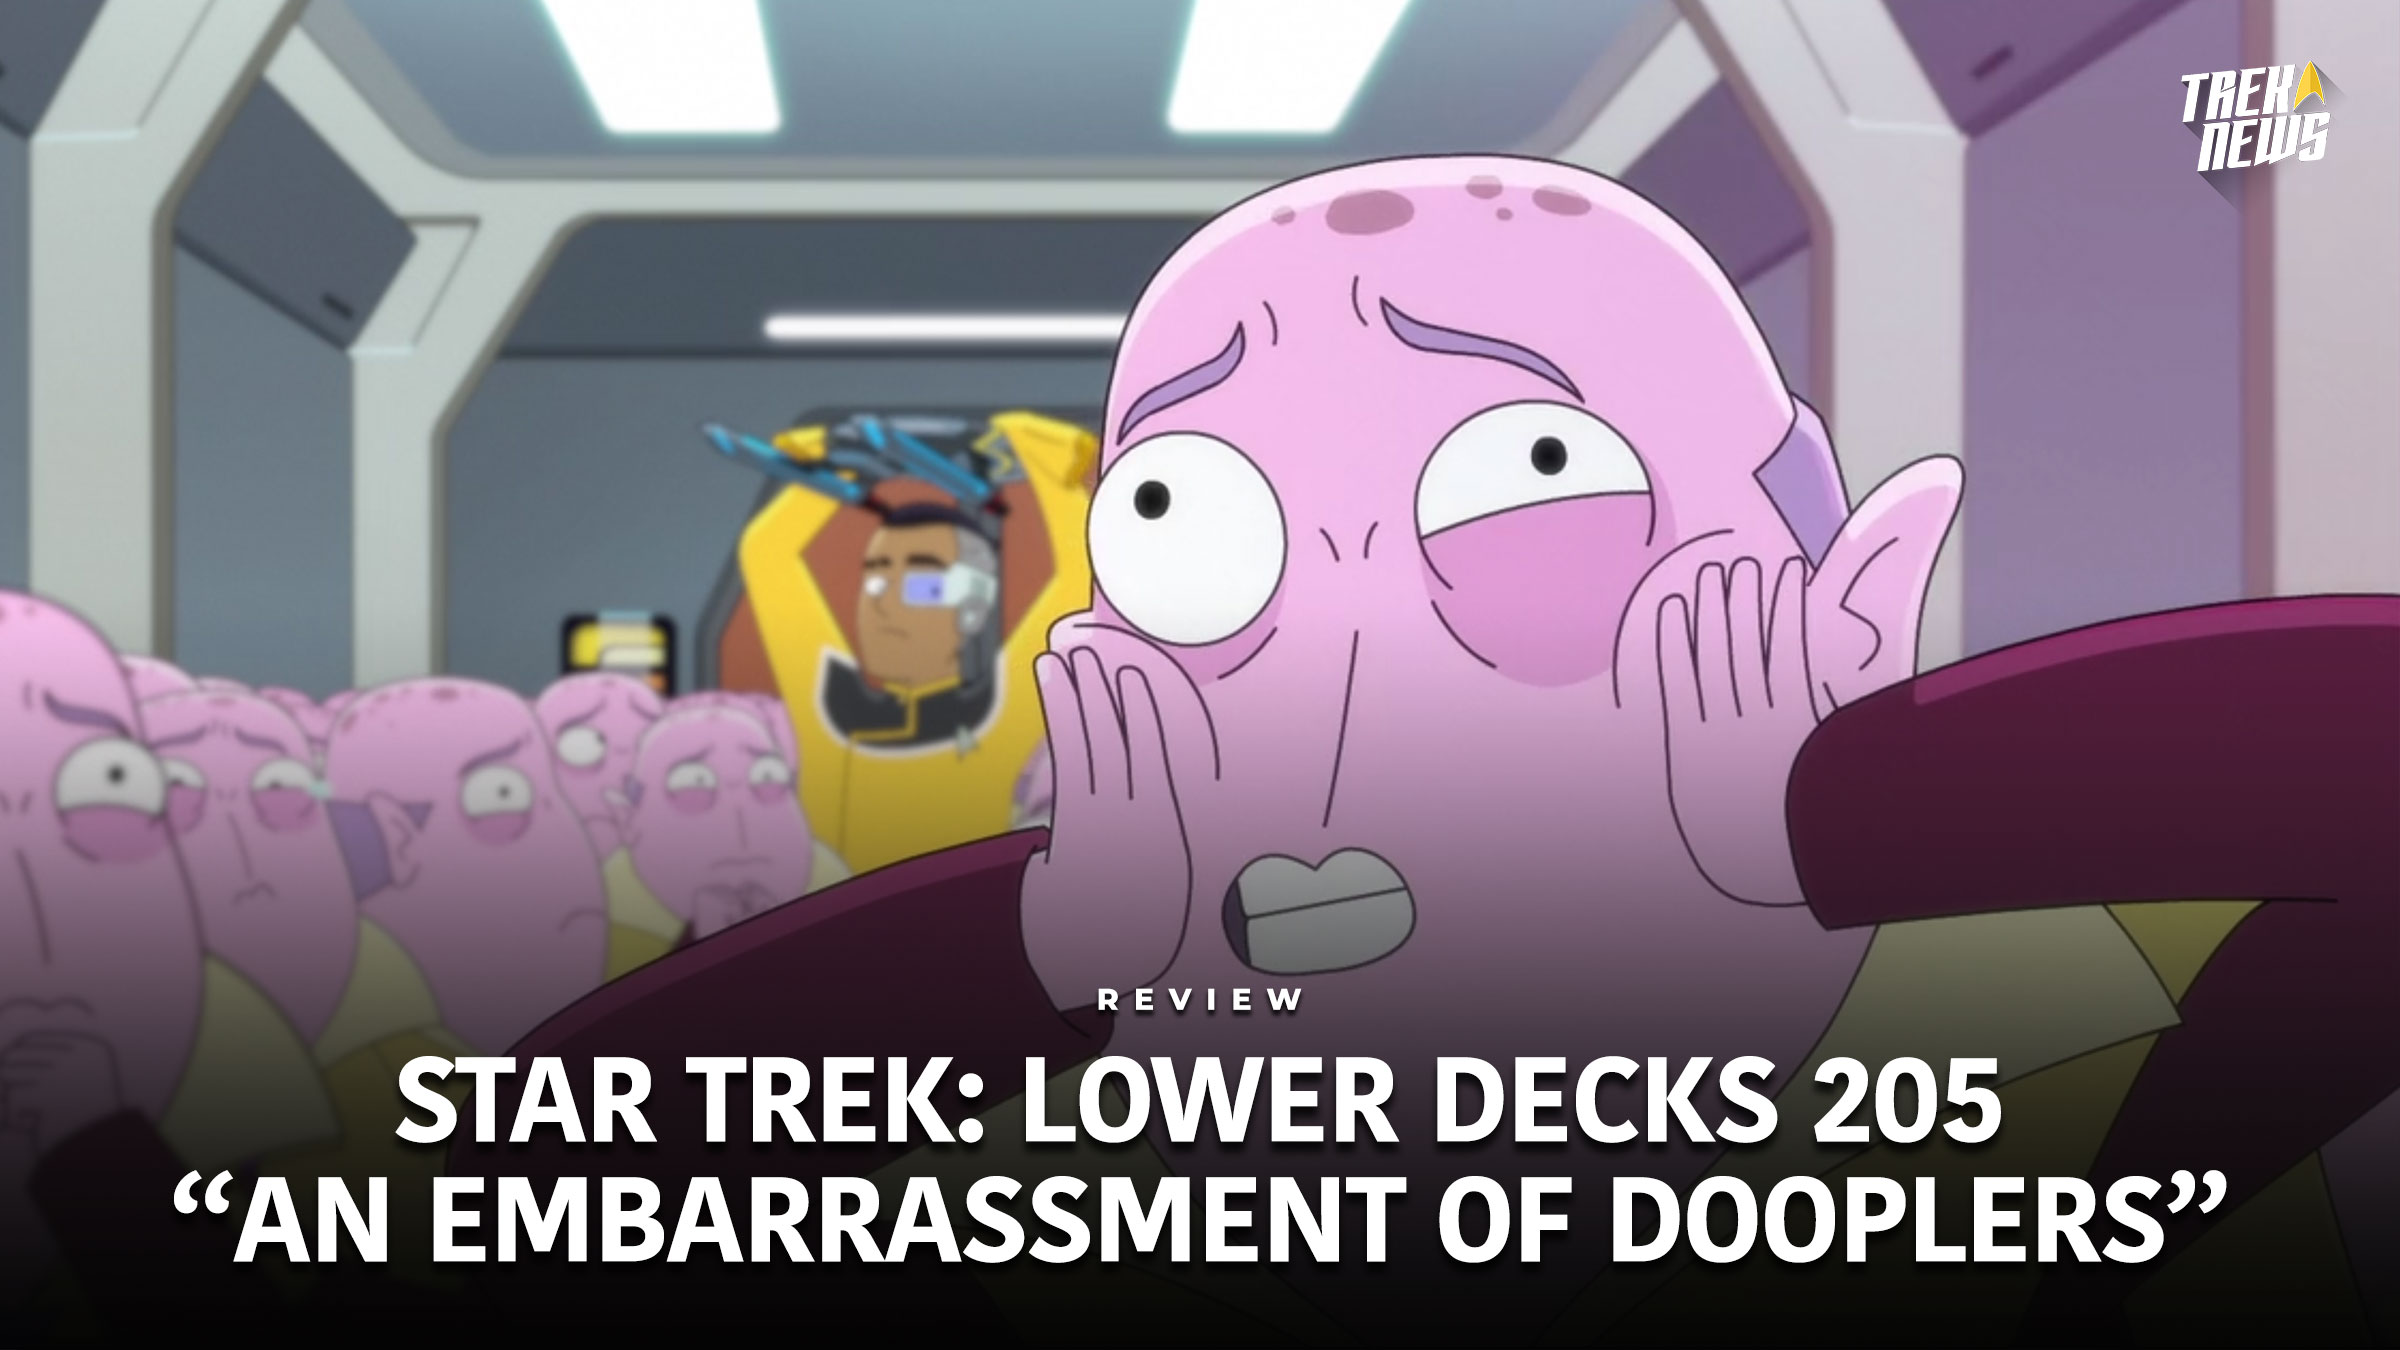 Star Trek: Lower Decks Episode 205 “An Embarrassment Of Dooplers” Review